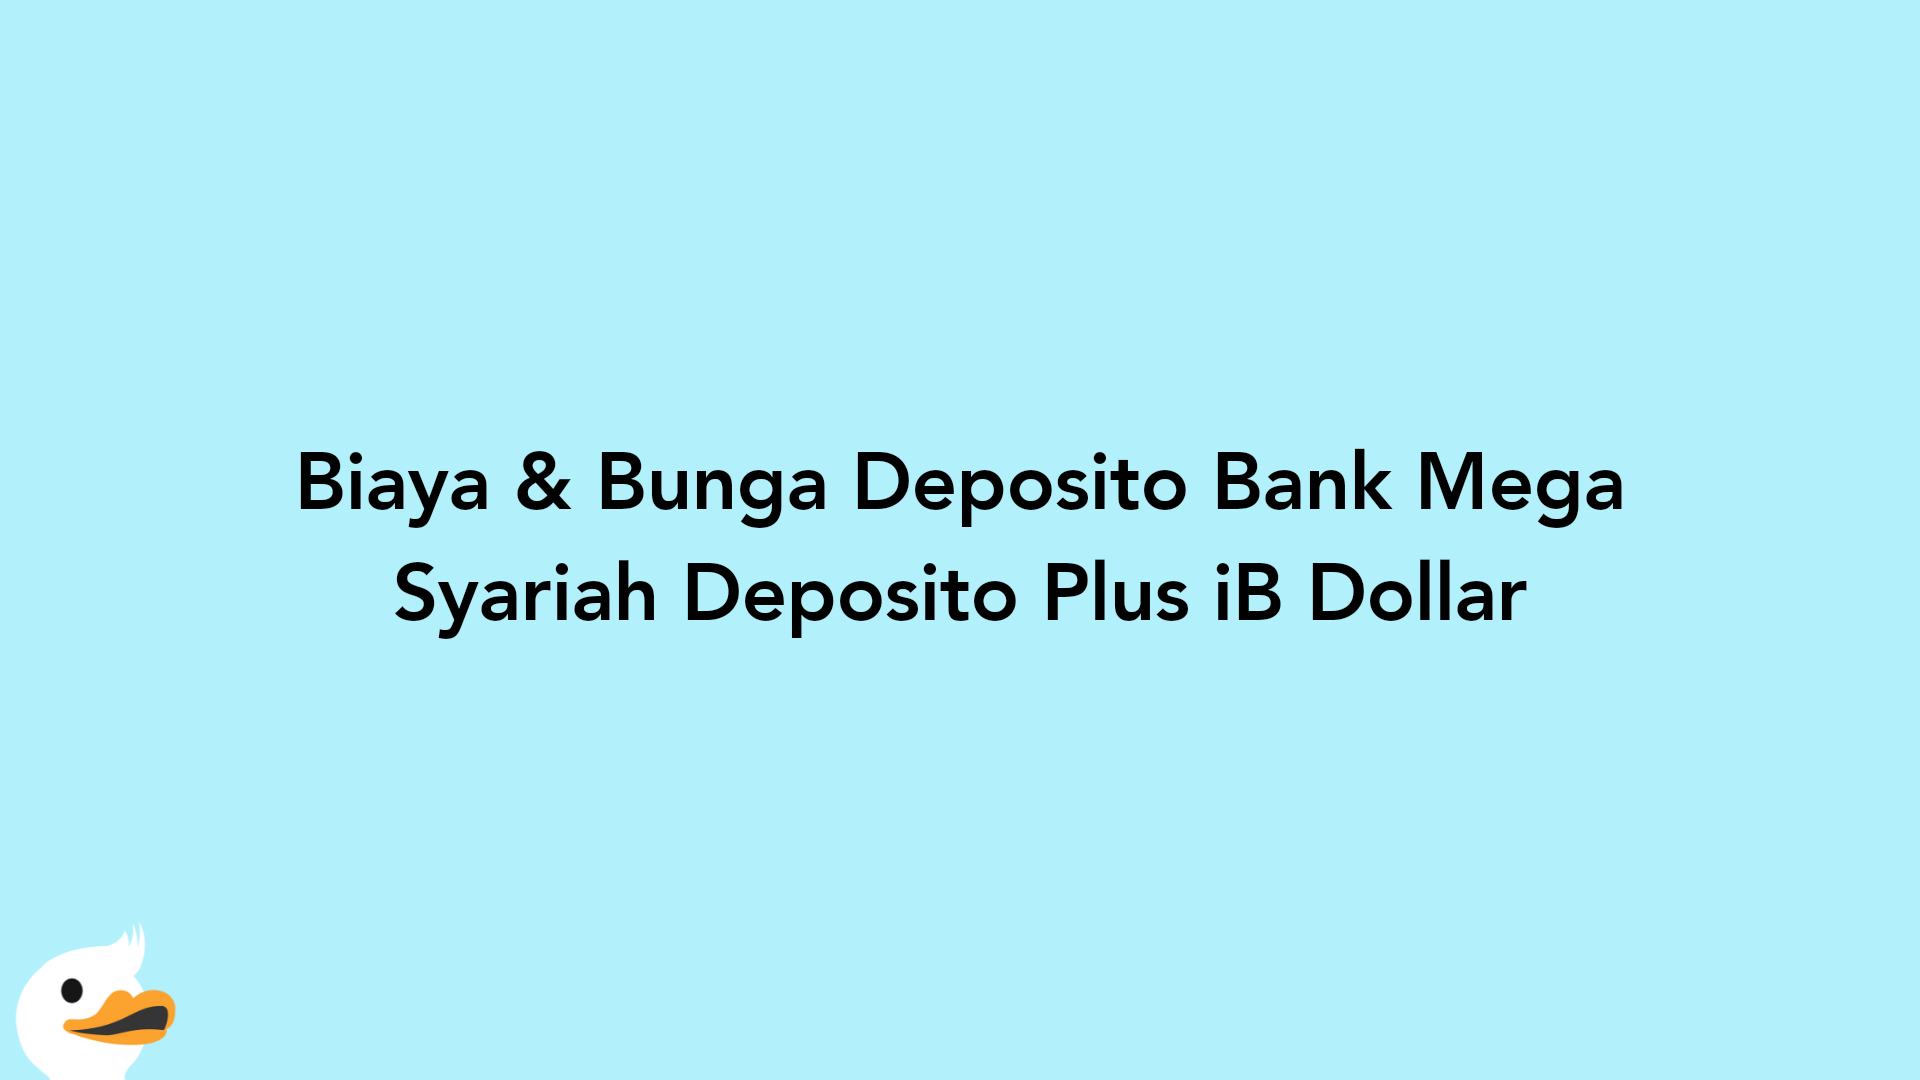 Biaya & Bunga Deposito Bank Mega Syariah Deposito Plus iB Dollar